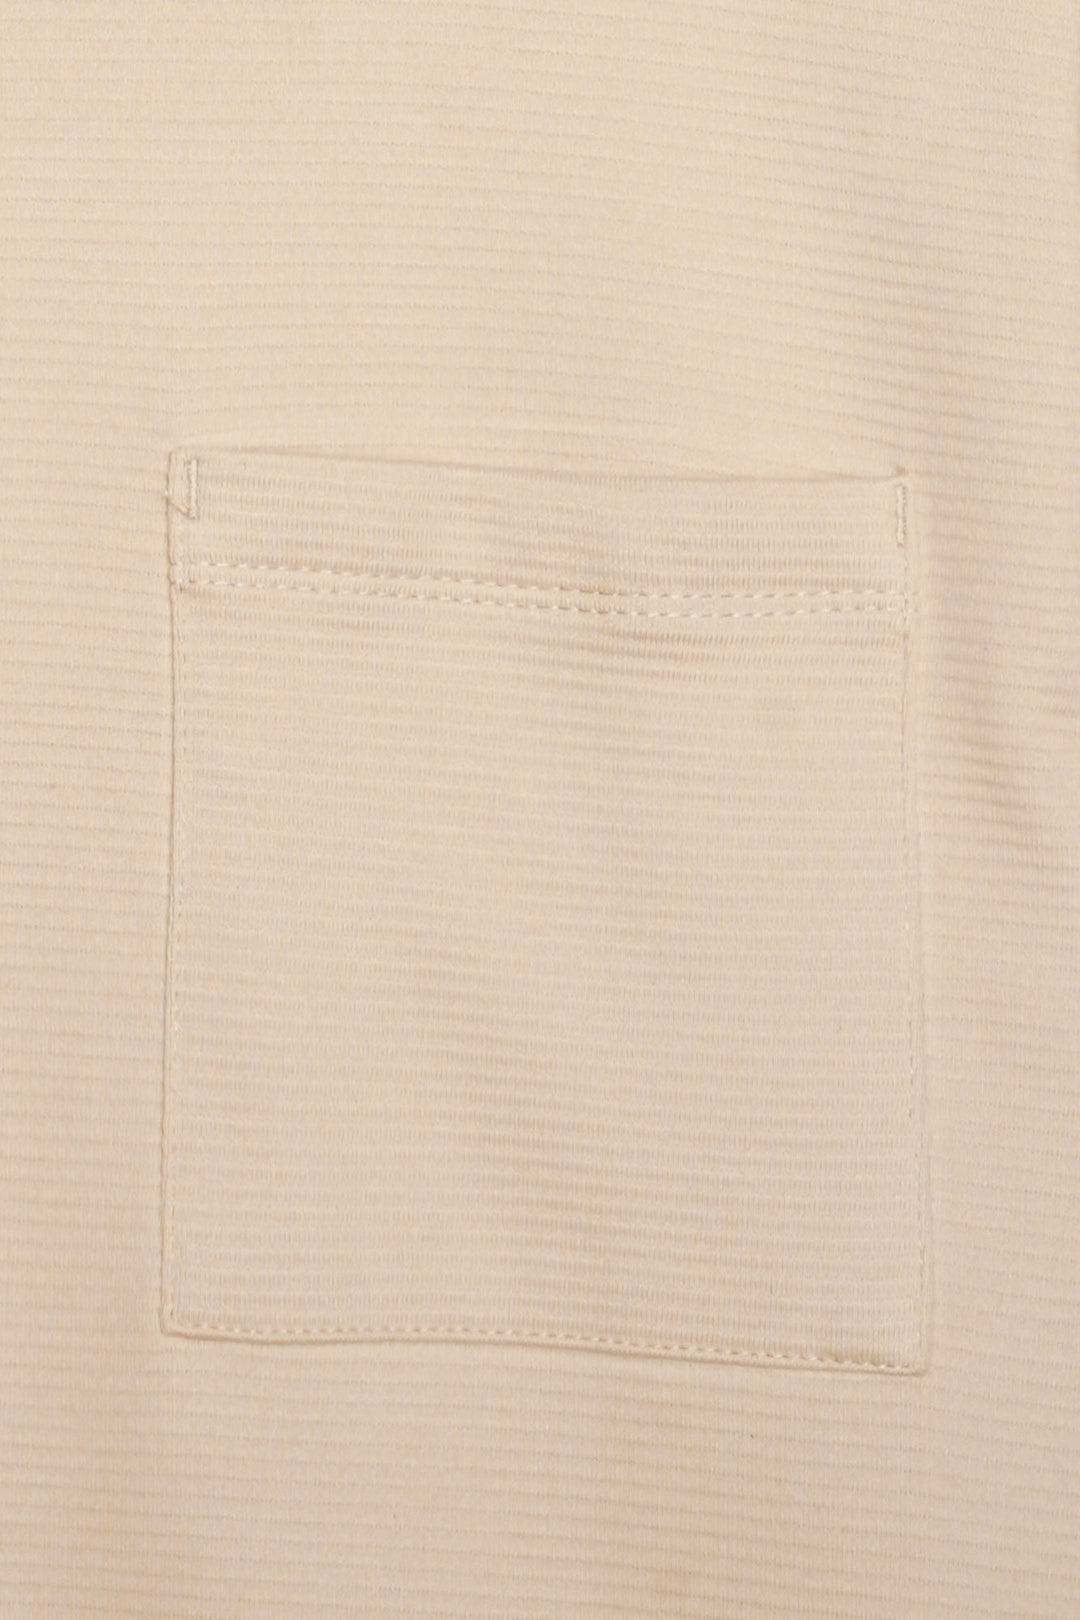 Dress Code Textured T-Shirt with Pocket